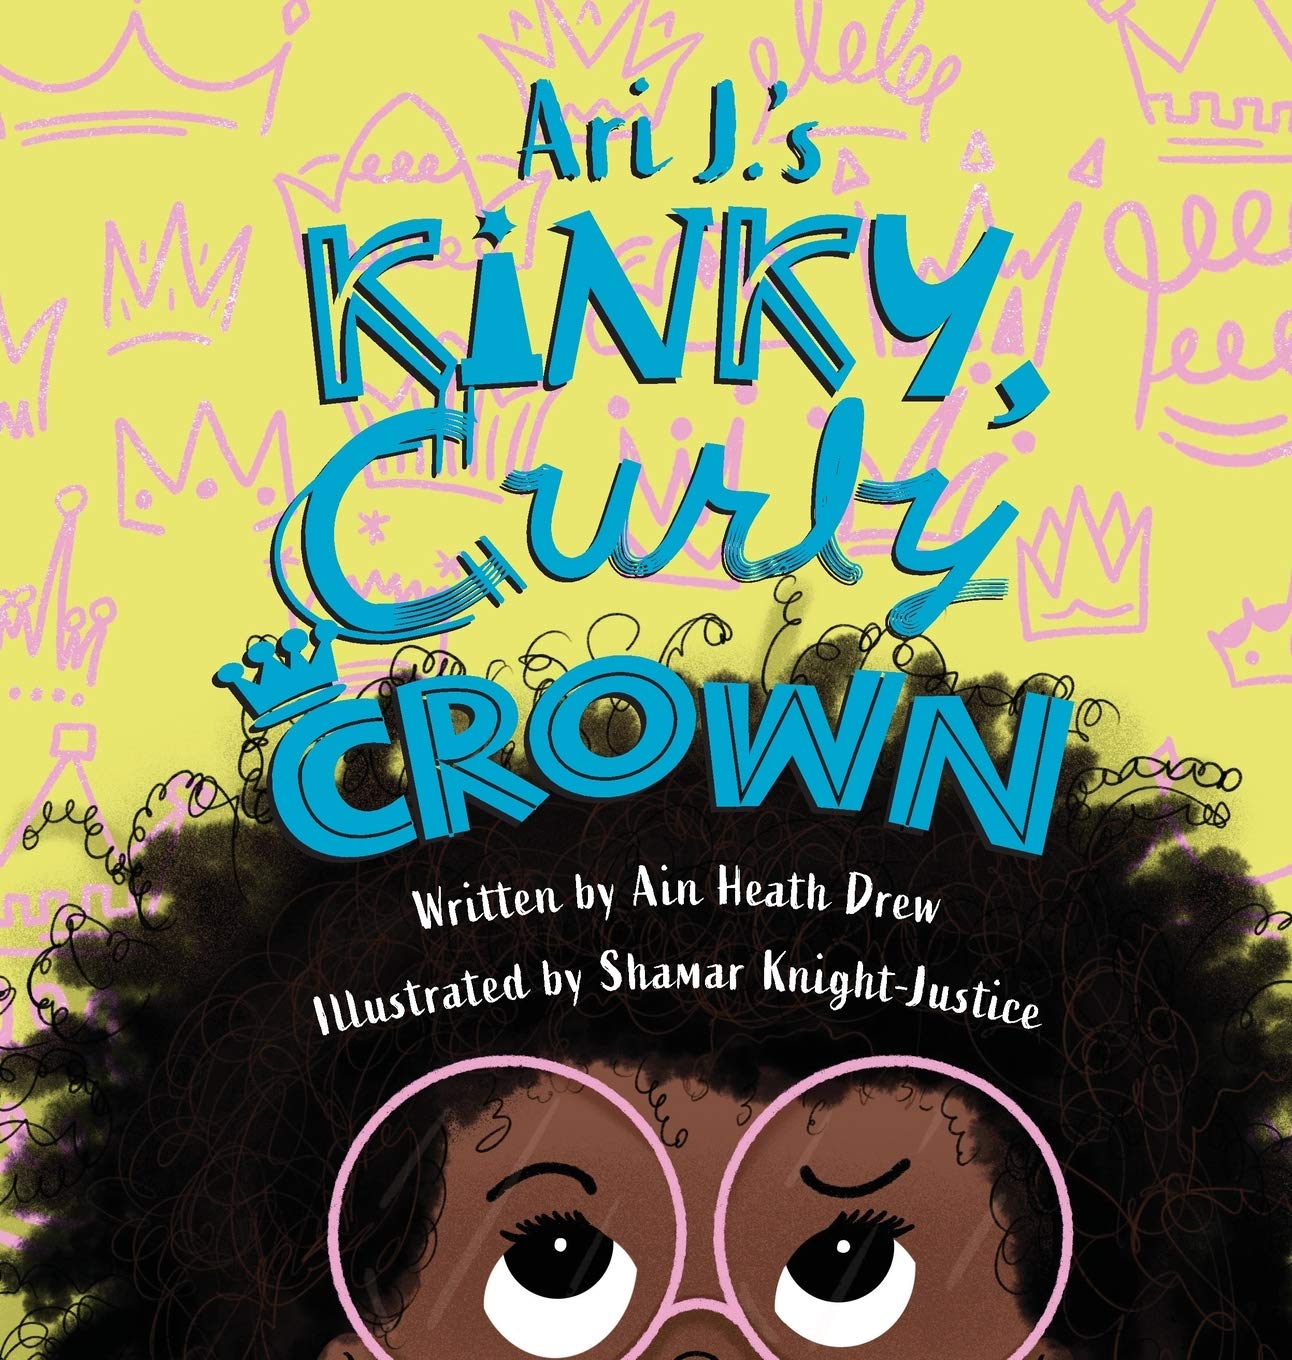 Ari J.'s Kinky, Curly Crown (Hardcover)